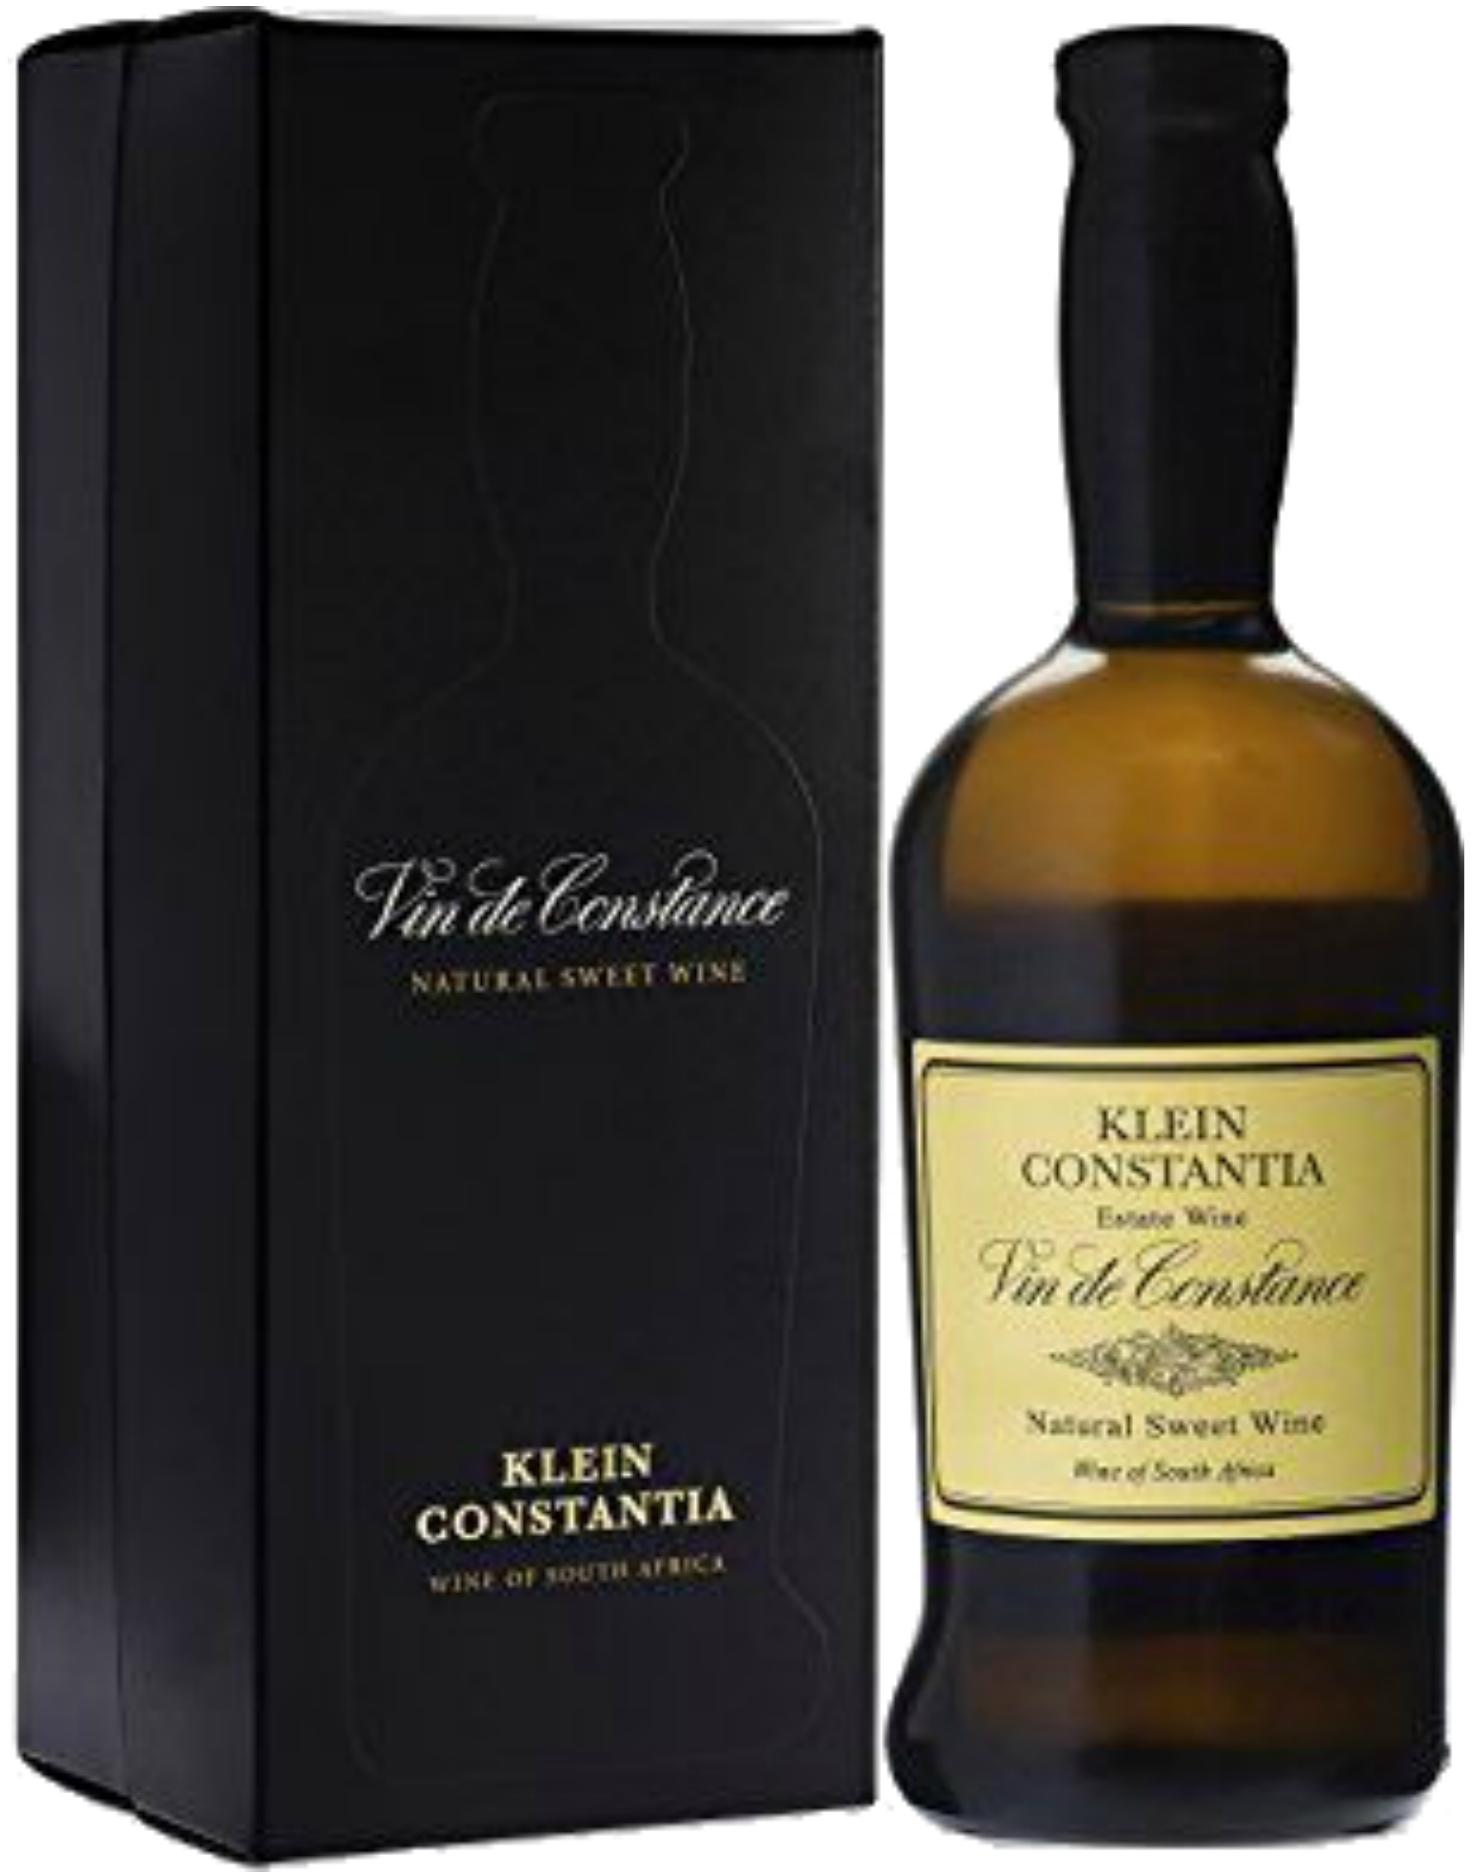 Klein Constantia Vin de Constance 2019